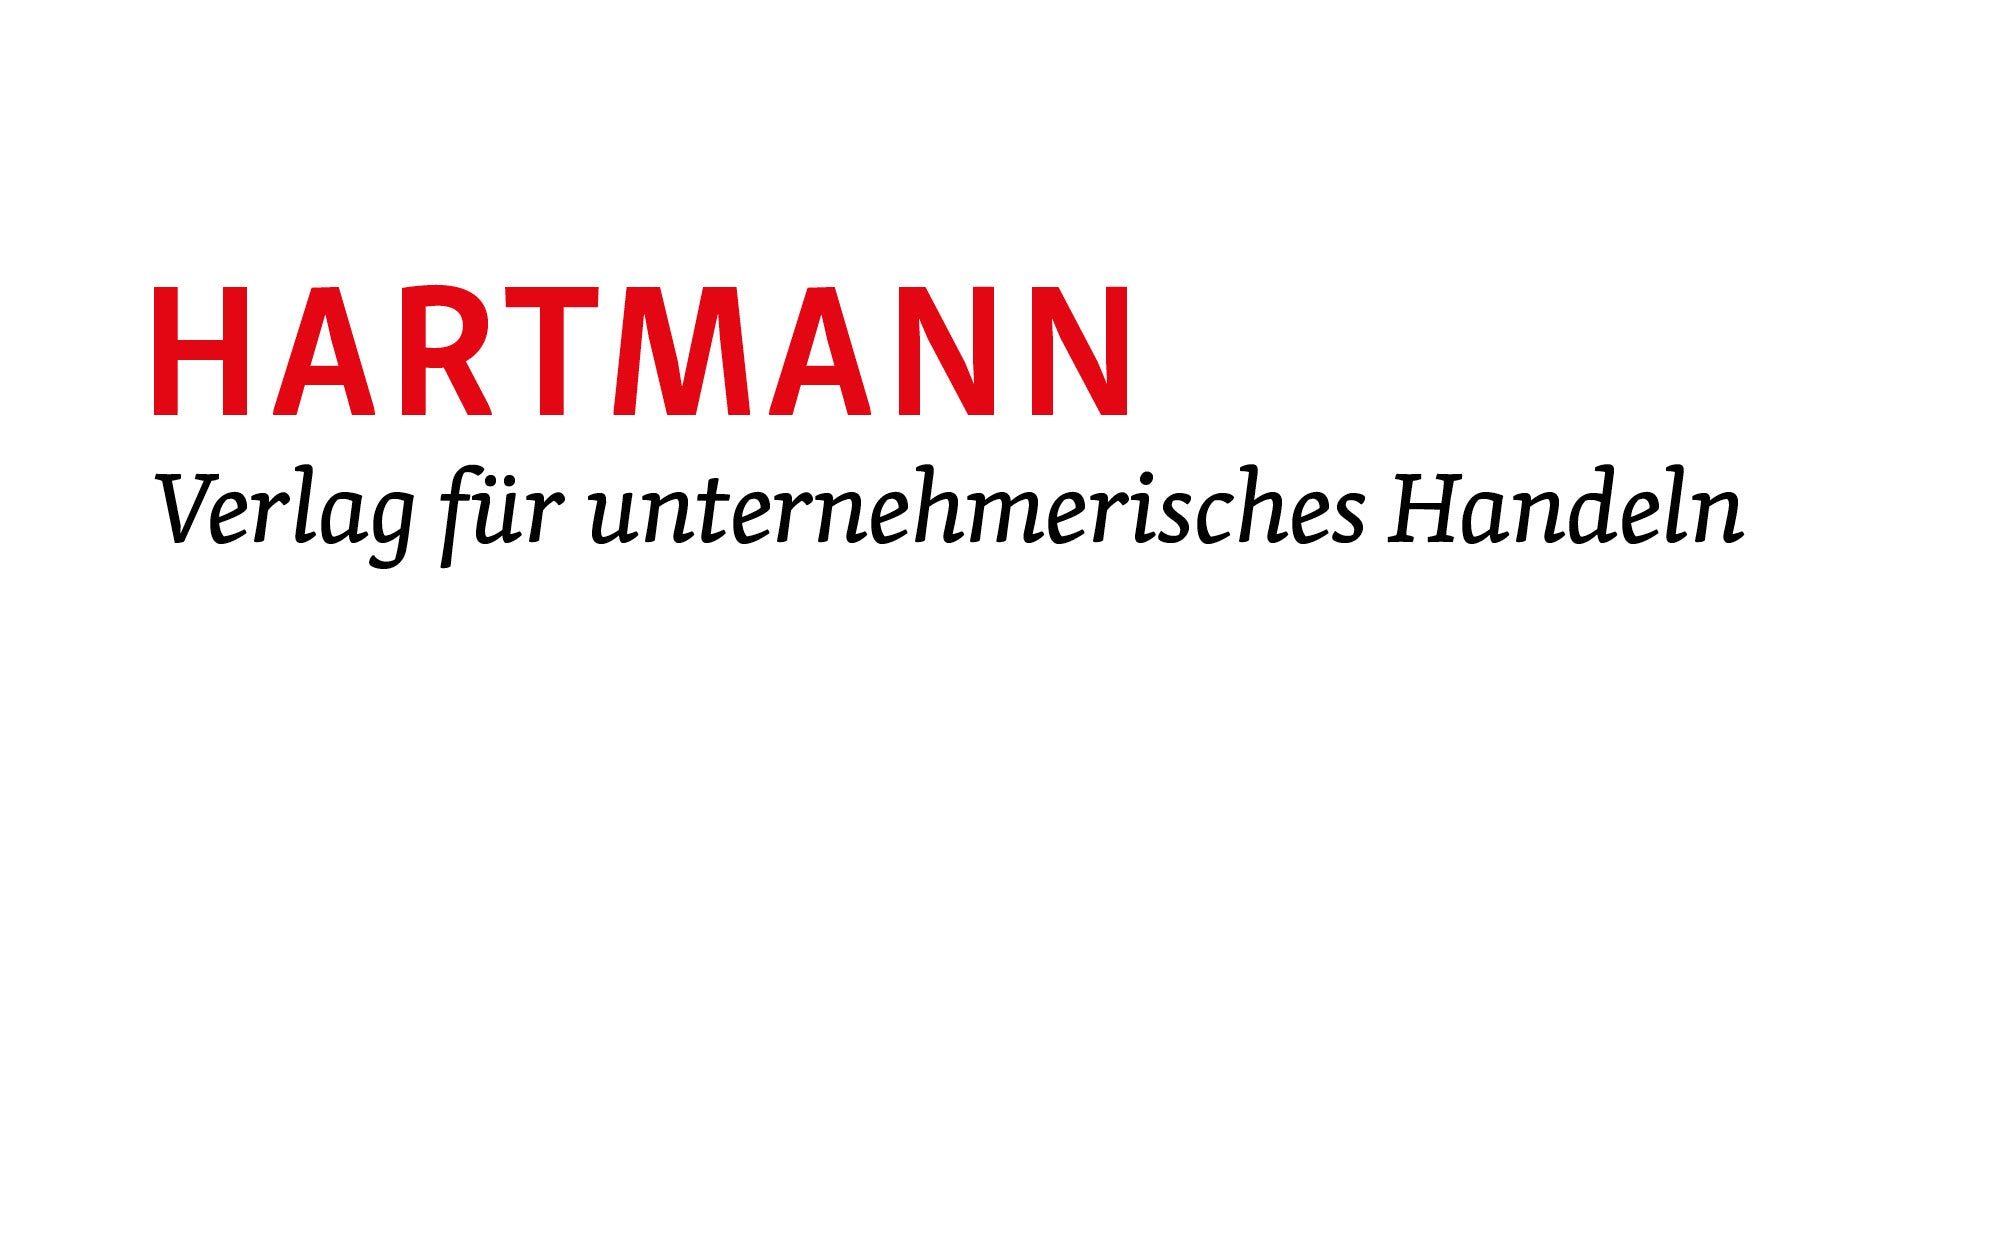 (c) Hartmann-verlag.de